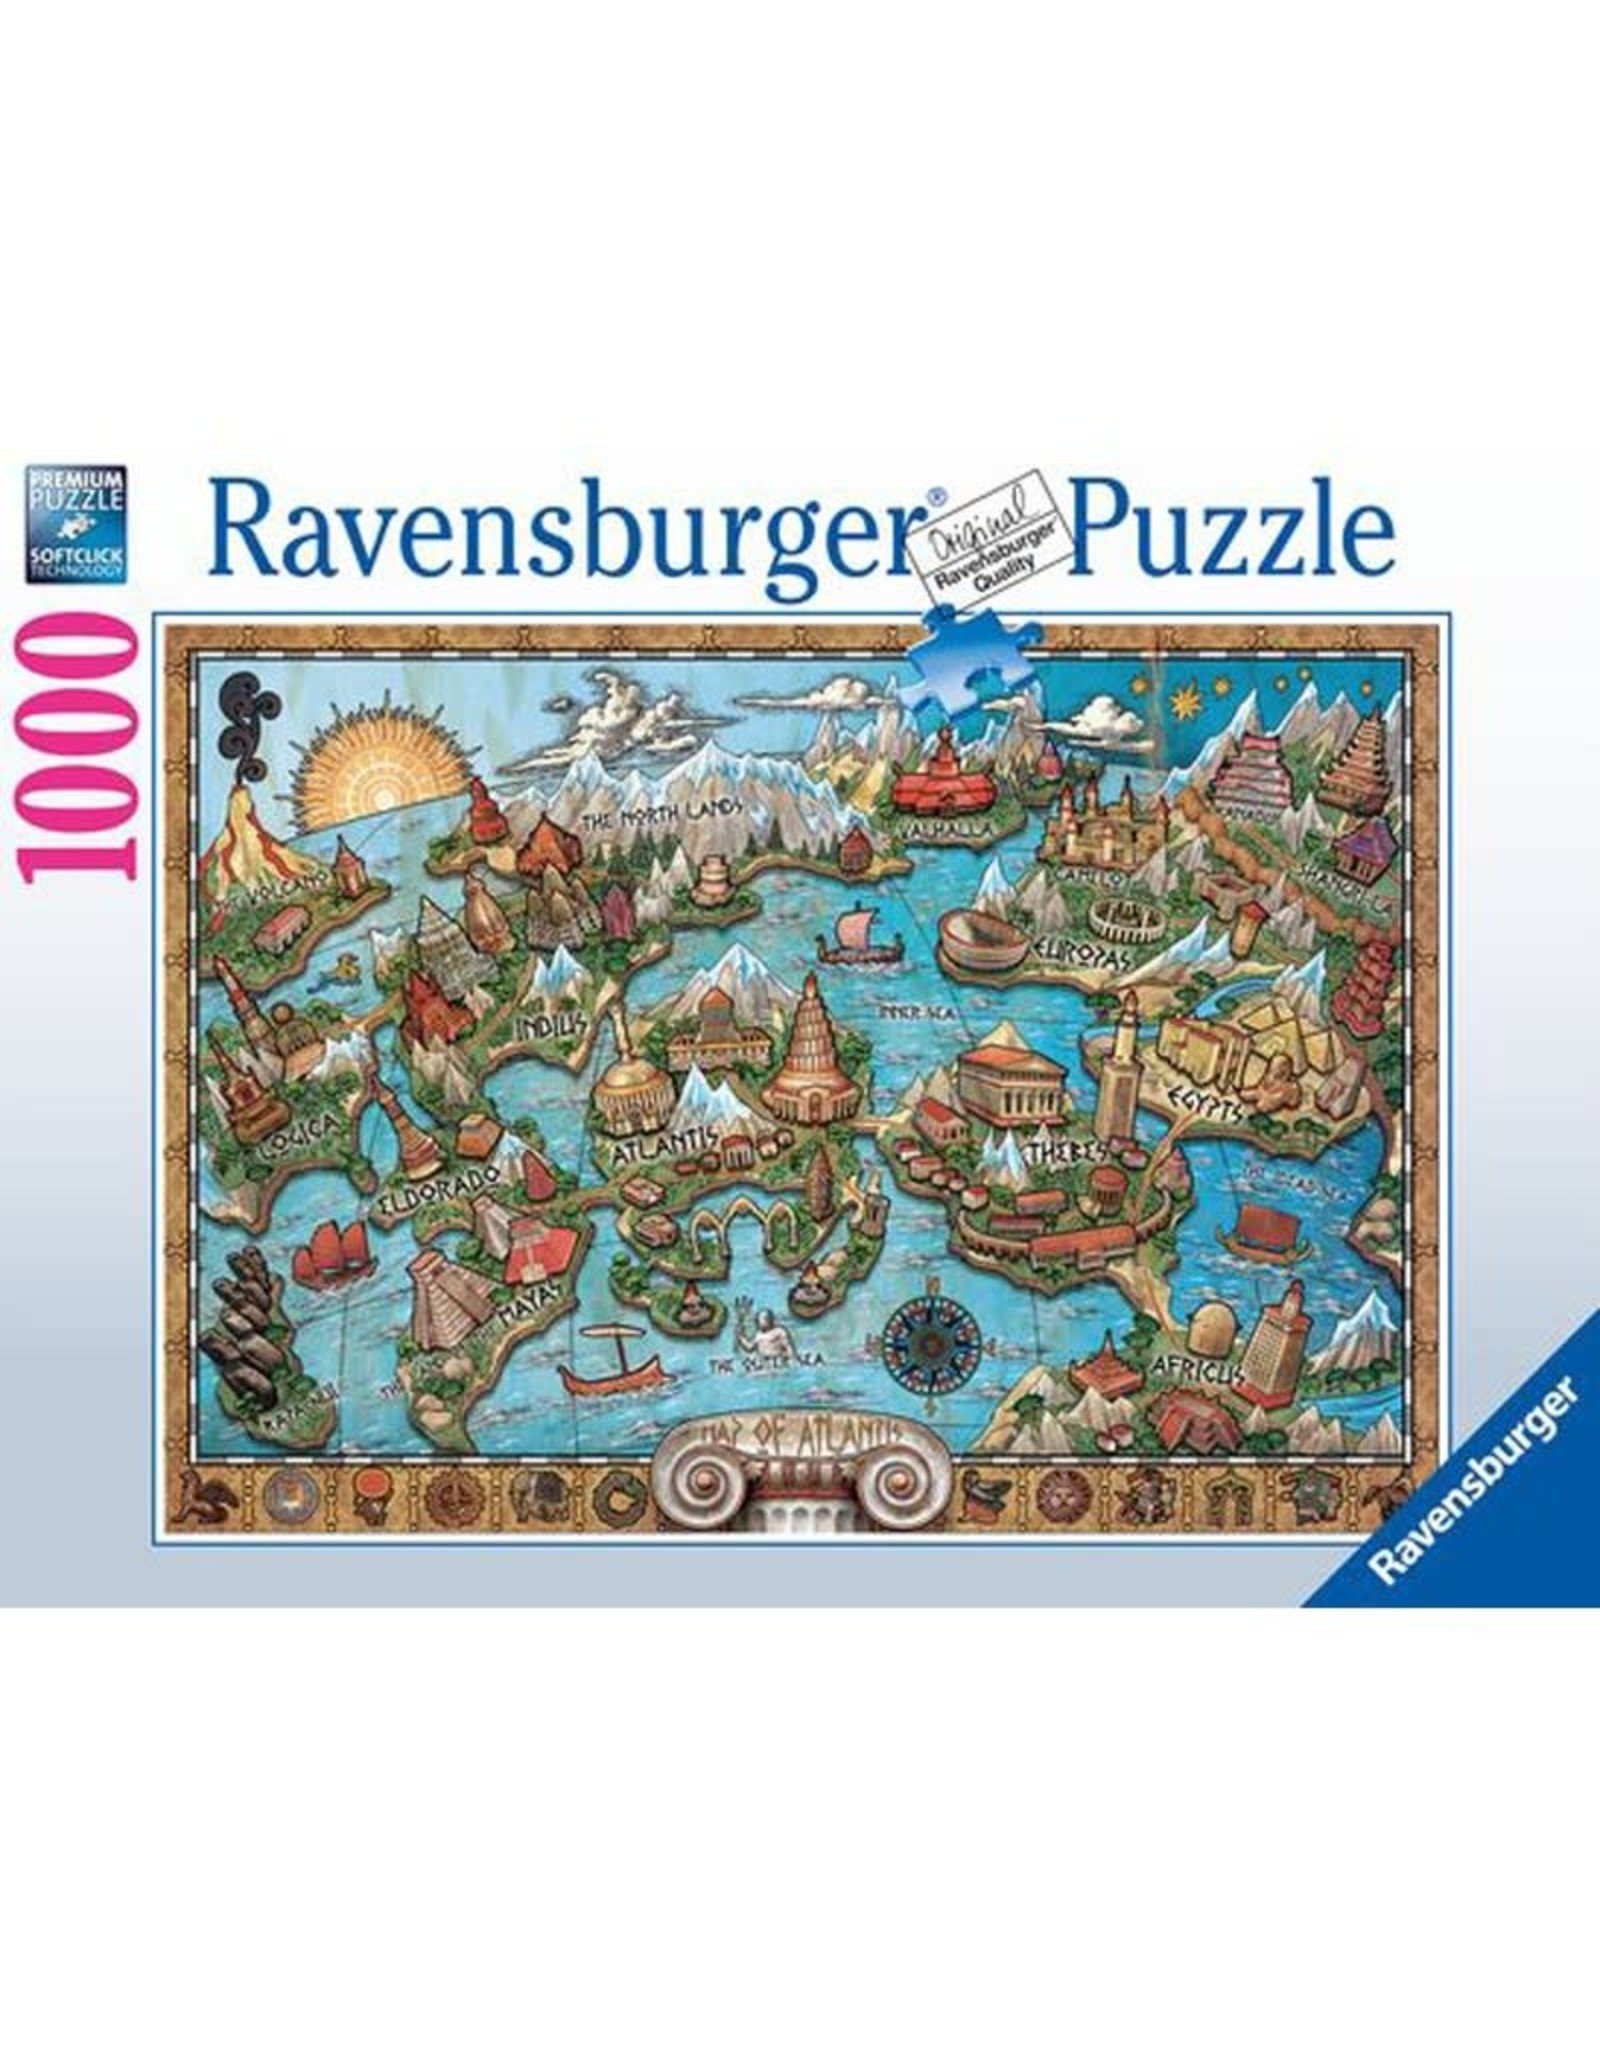 Ravensburger Puzzle Ravensburger 1000 pcs Mysterious Atlantis